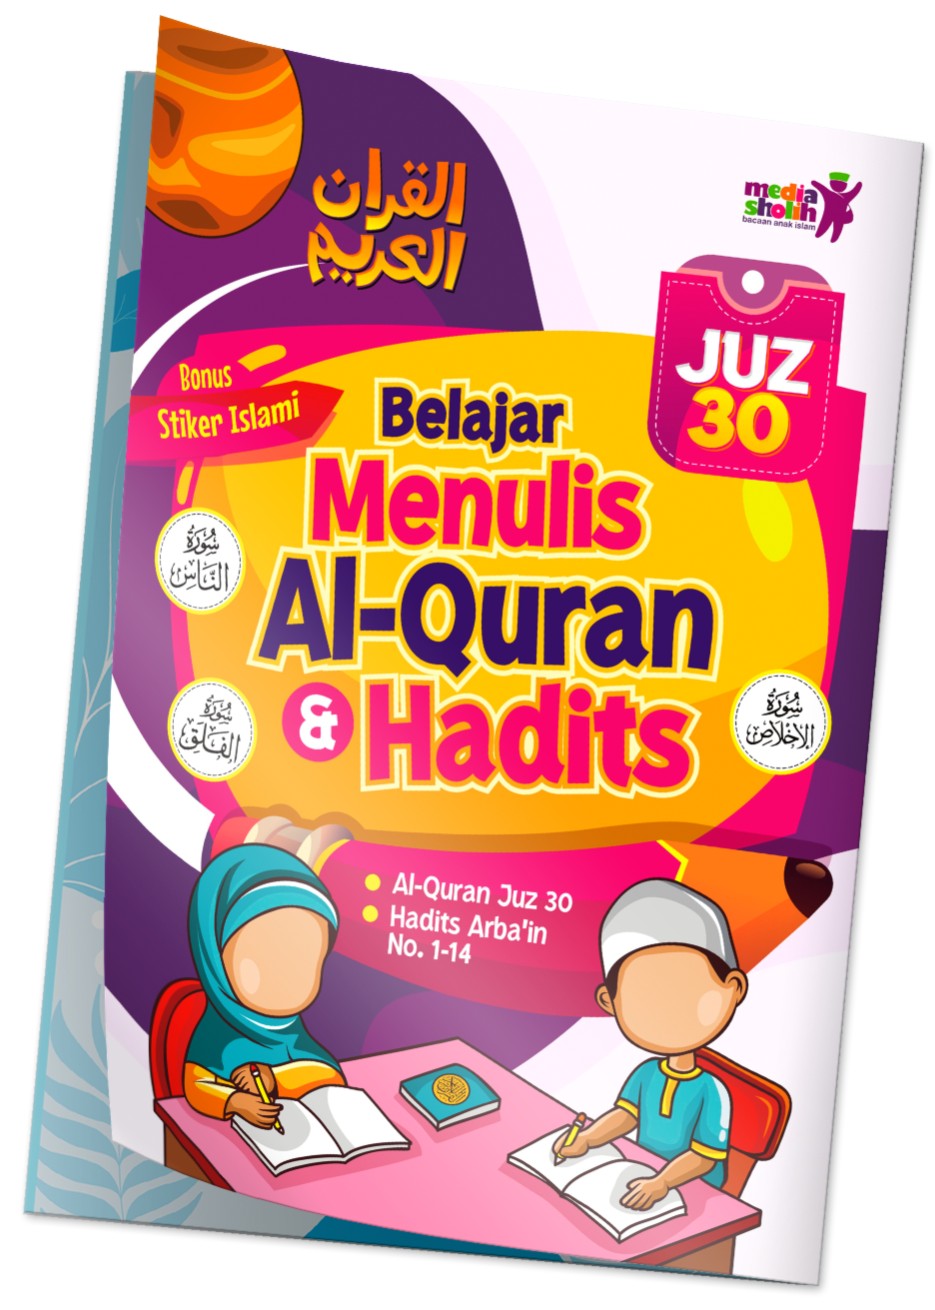 Belajar Menulis Al-Quran dan Hadits Juz 30